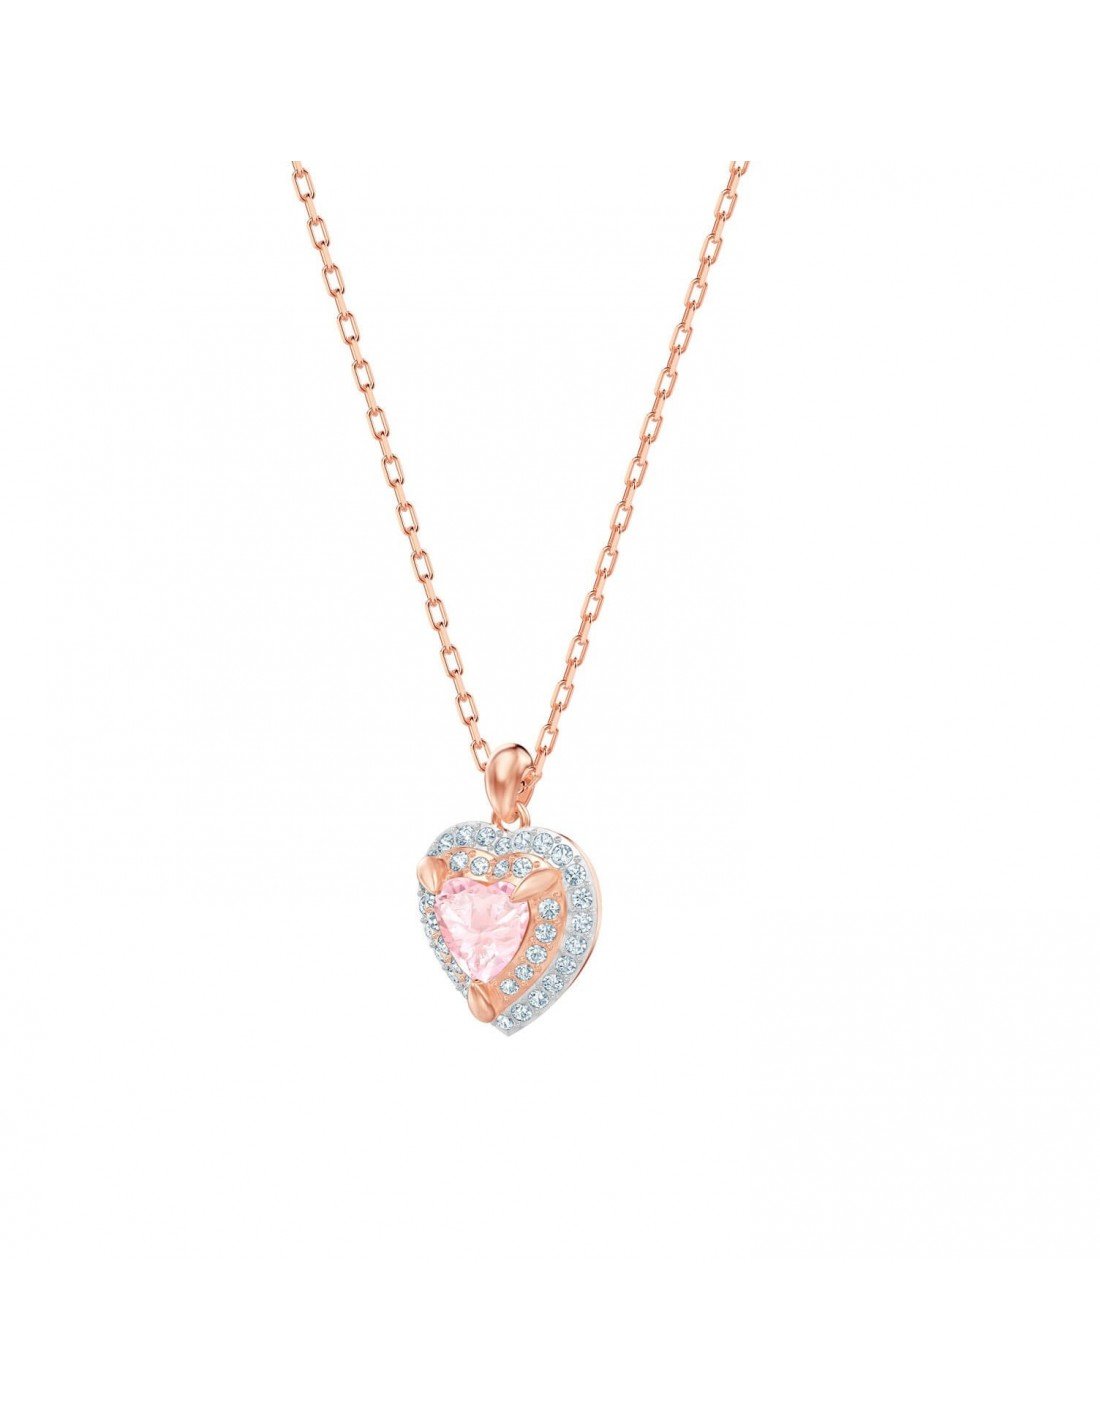 Swarovski Crystal Multi Crystal Pink Heart Necklace 14-18” W/Box | eBay